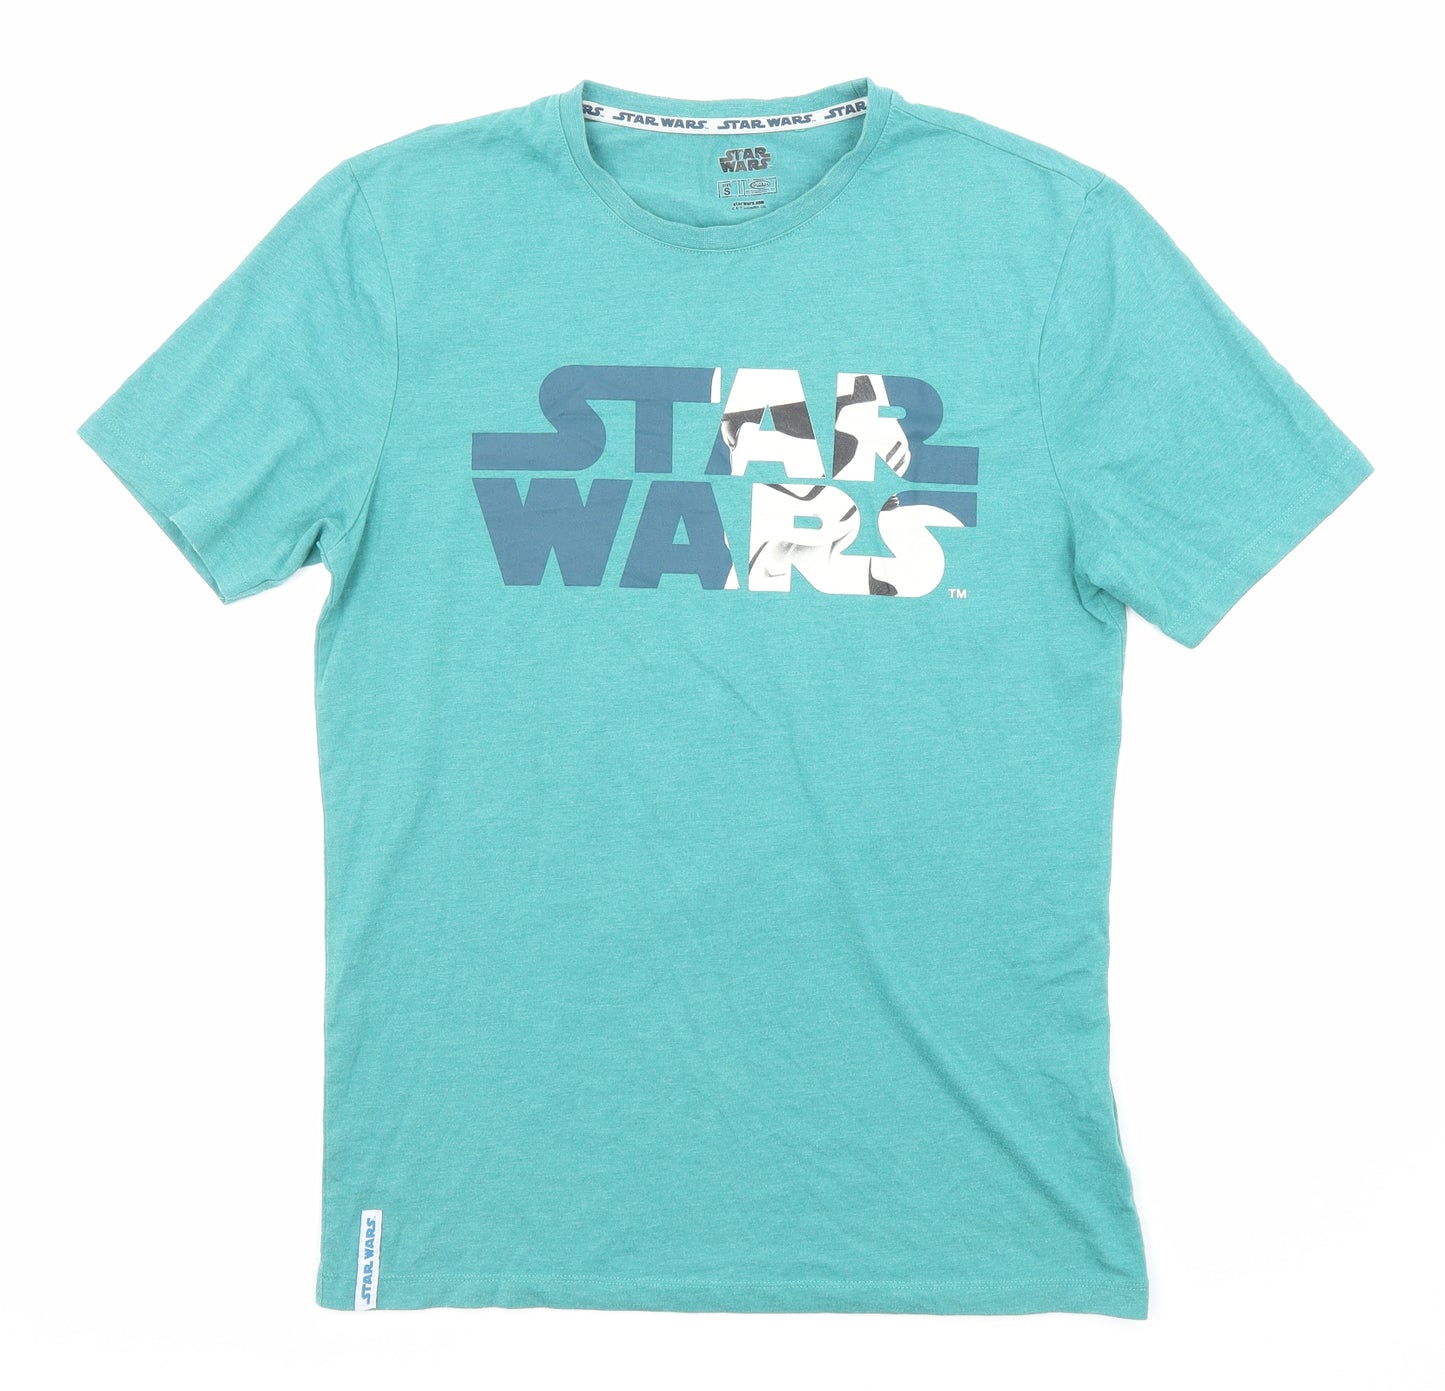 Star Wars Mens Green Cotton T-Shirt Size S Crew Neck - Storm Trooper Star Wars